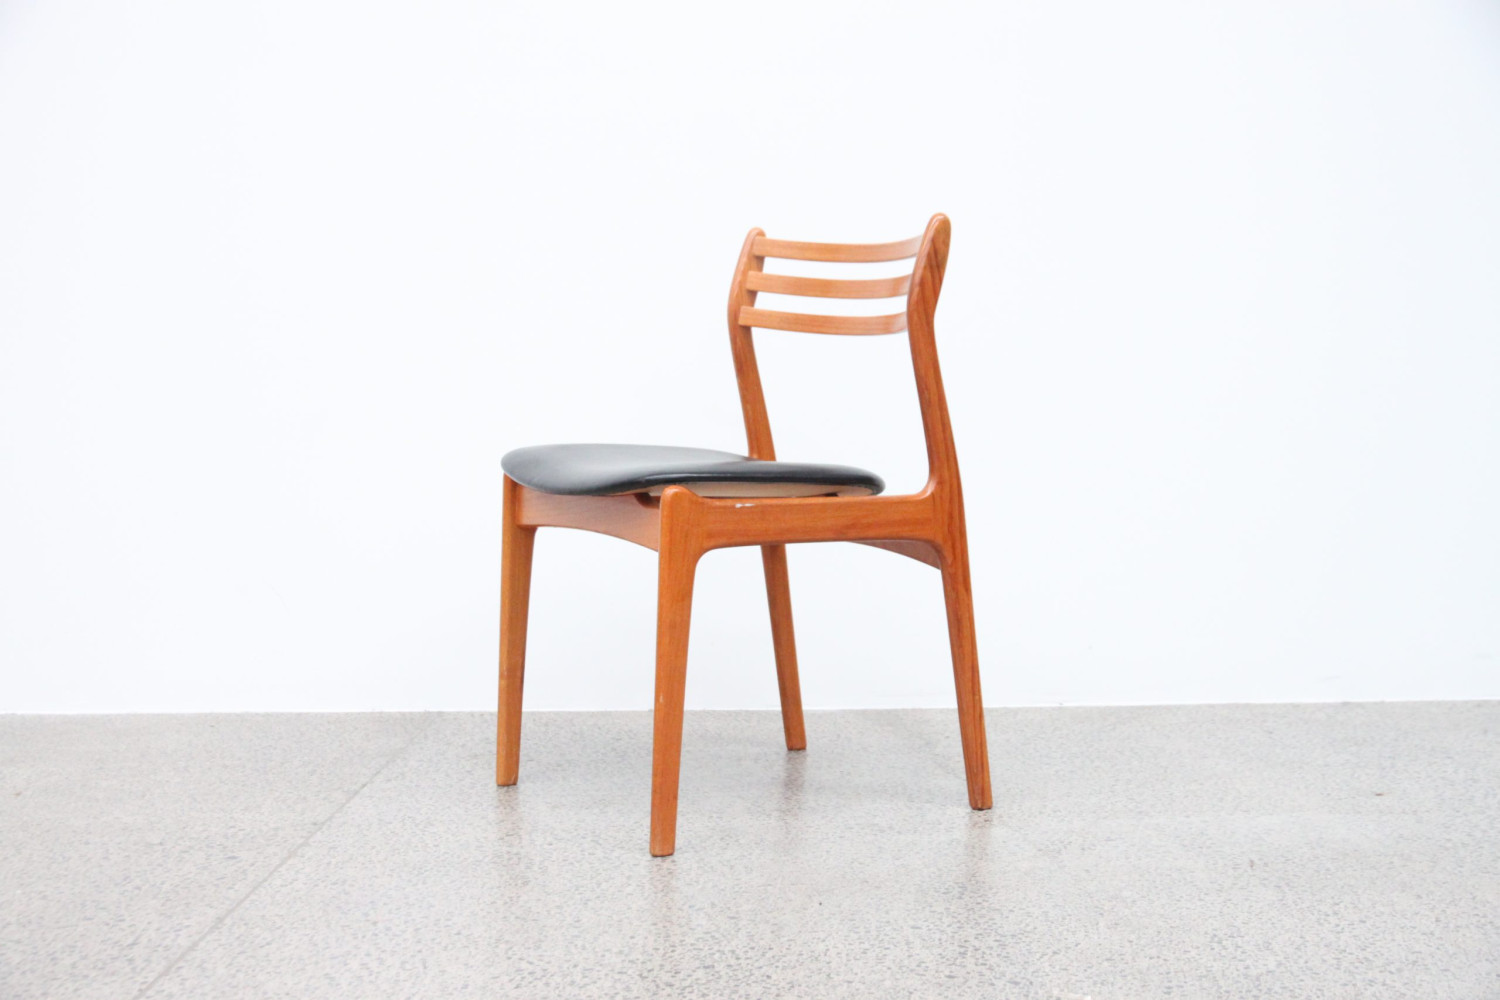 Chairs by P.E Jorgensen x8